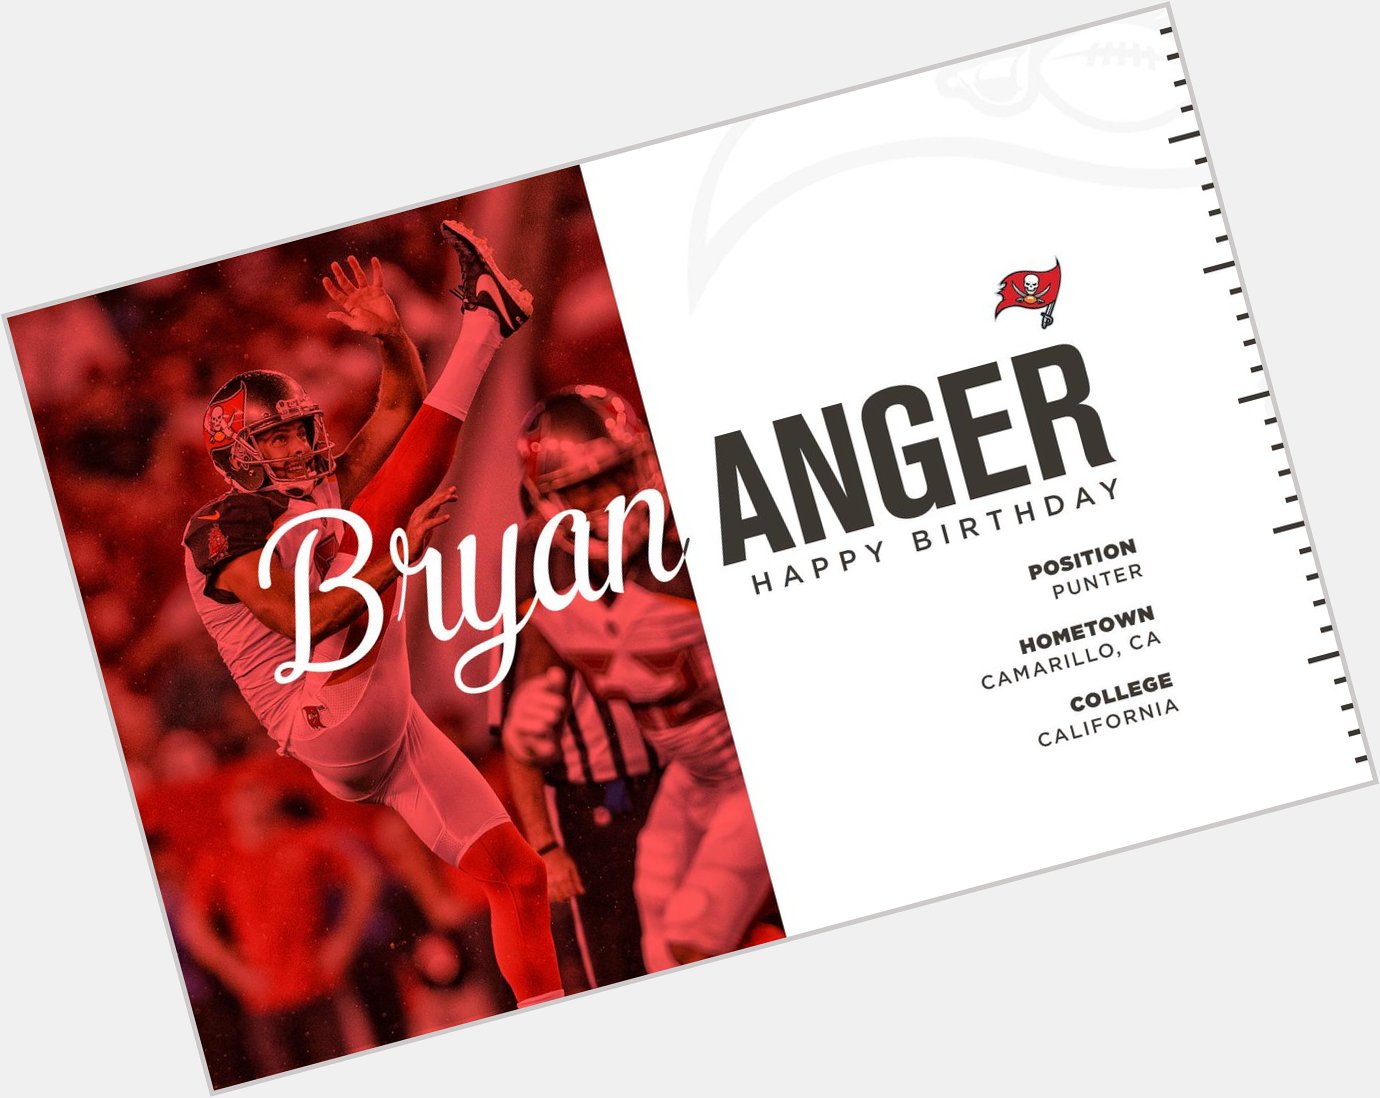 Happy Birthday, Bryan Anger! 